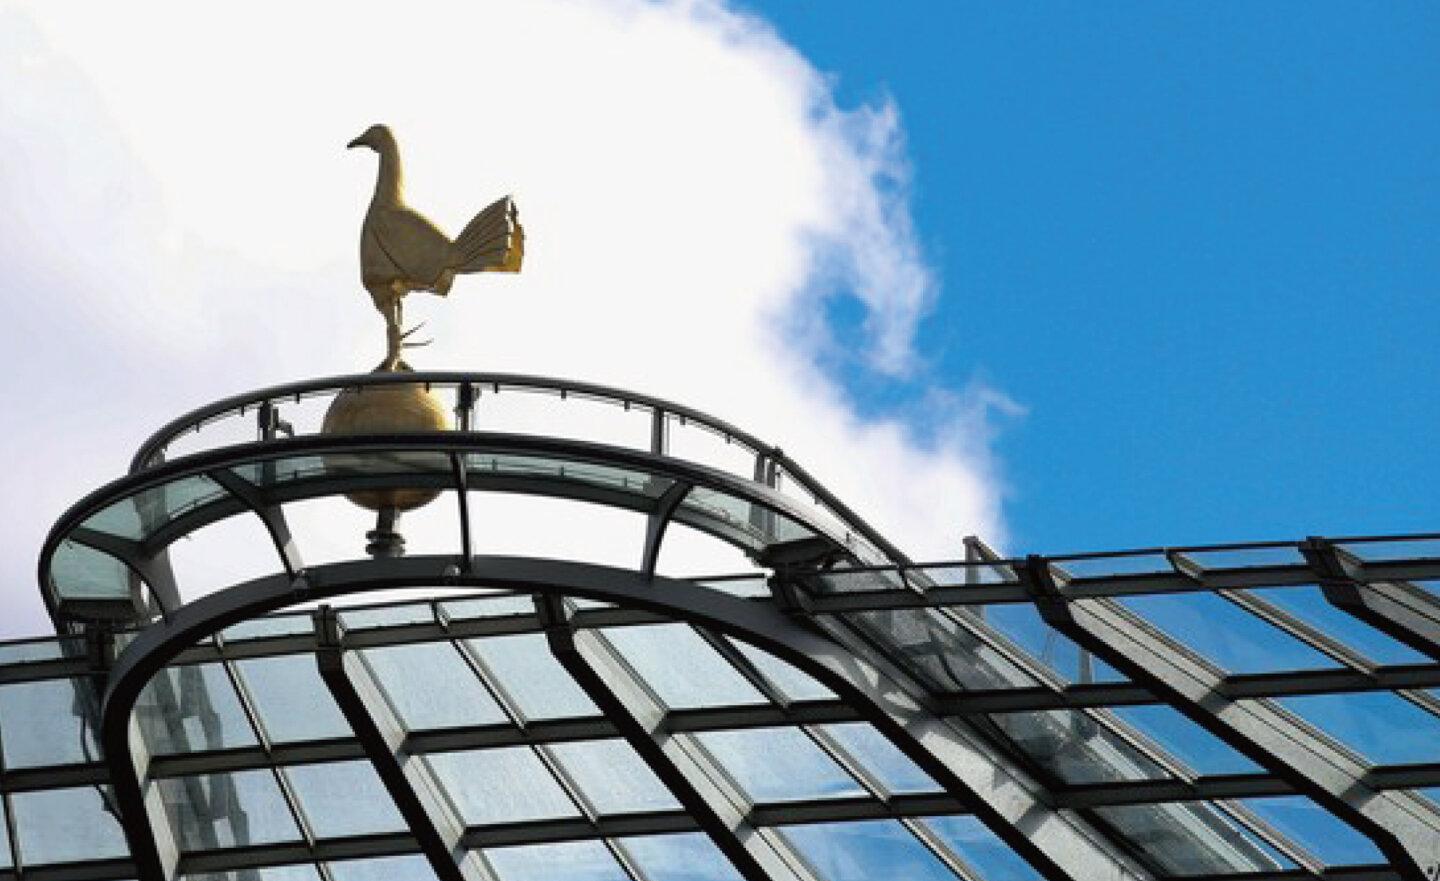 Shutterstock 與英超足球聯賽 Tottenham Hotspur 合作，供應官方照片